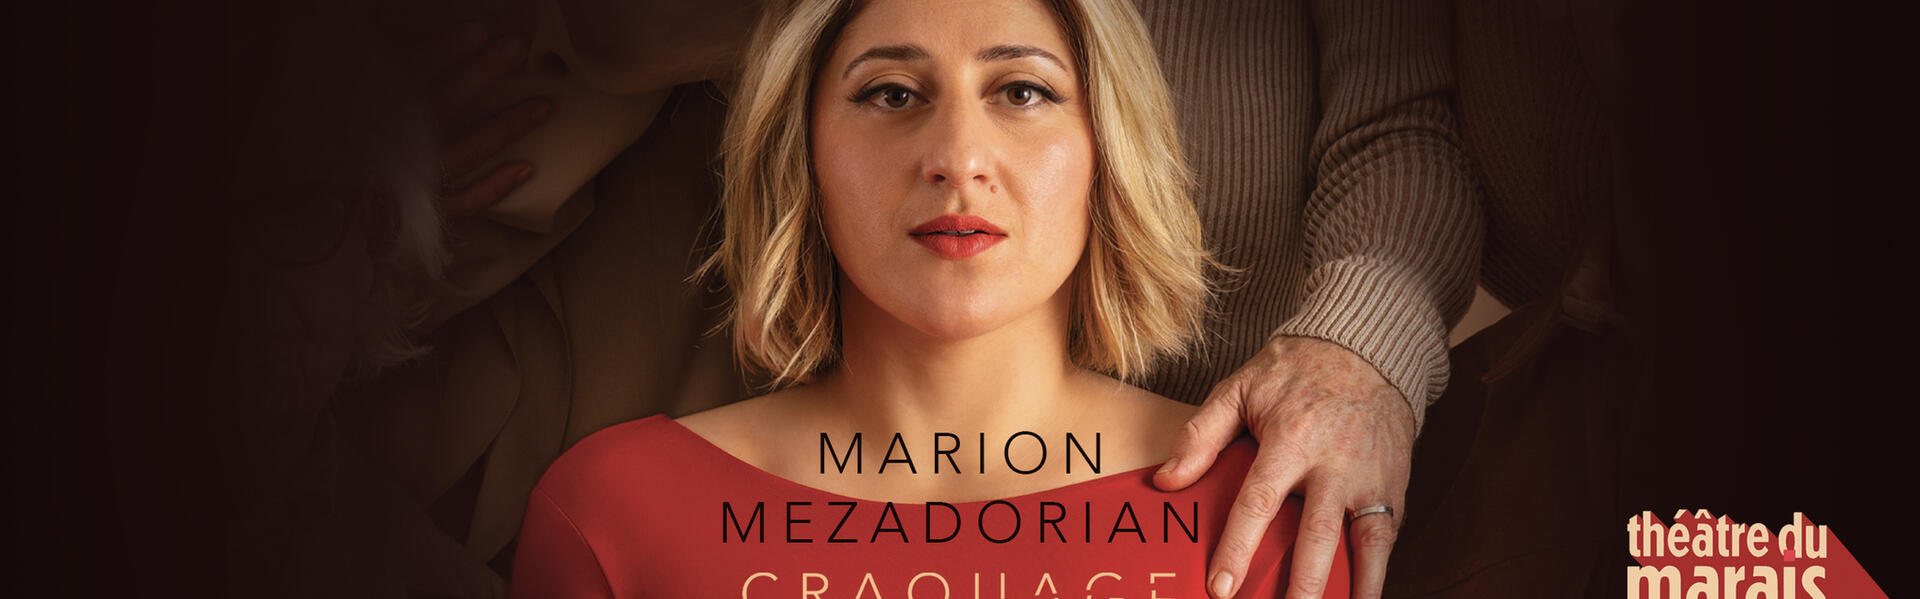 Marion Mezadorian dans "Craquage"